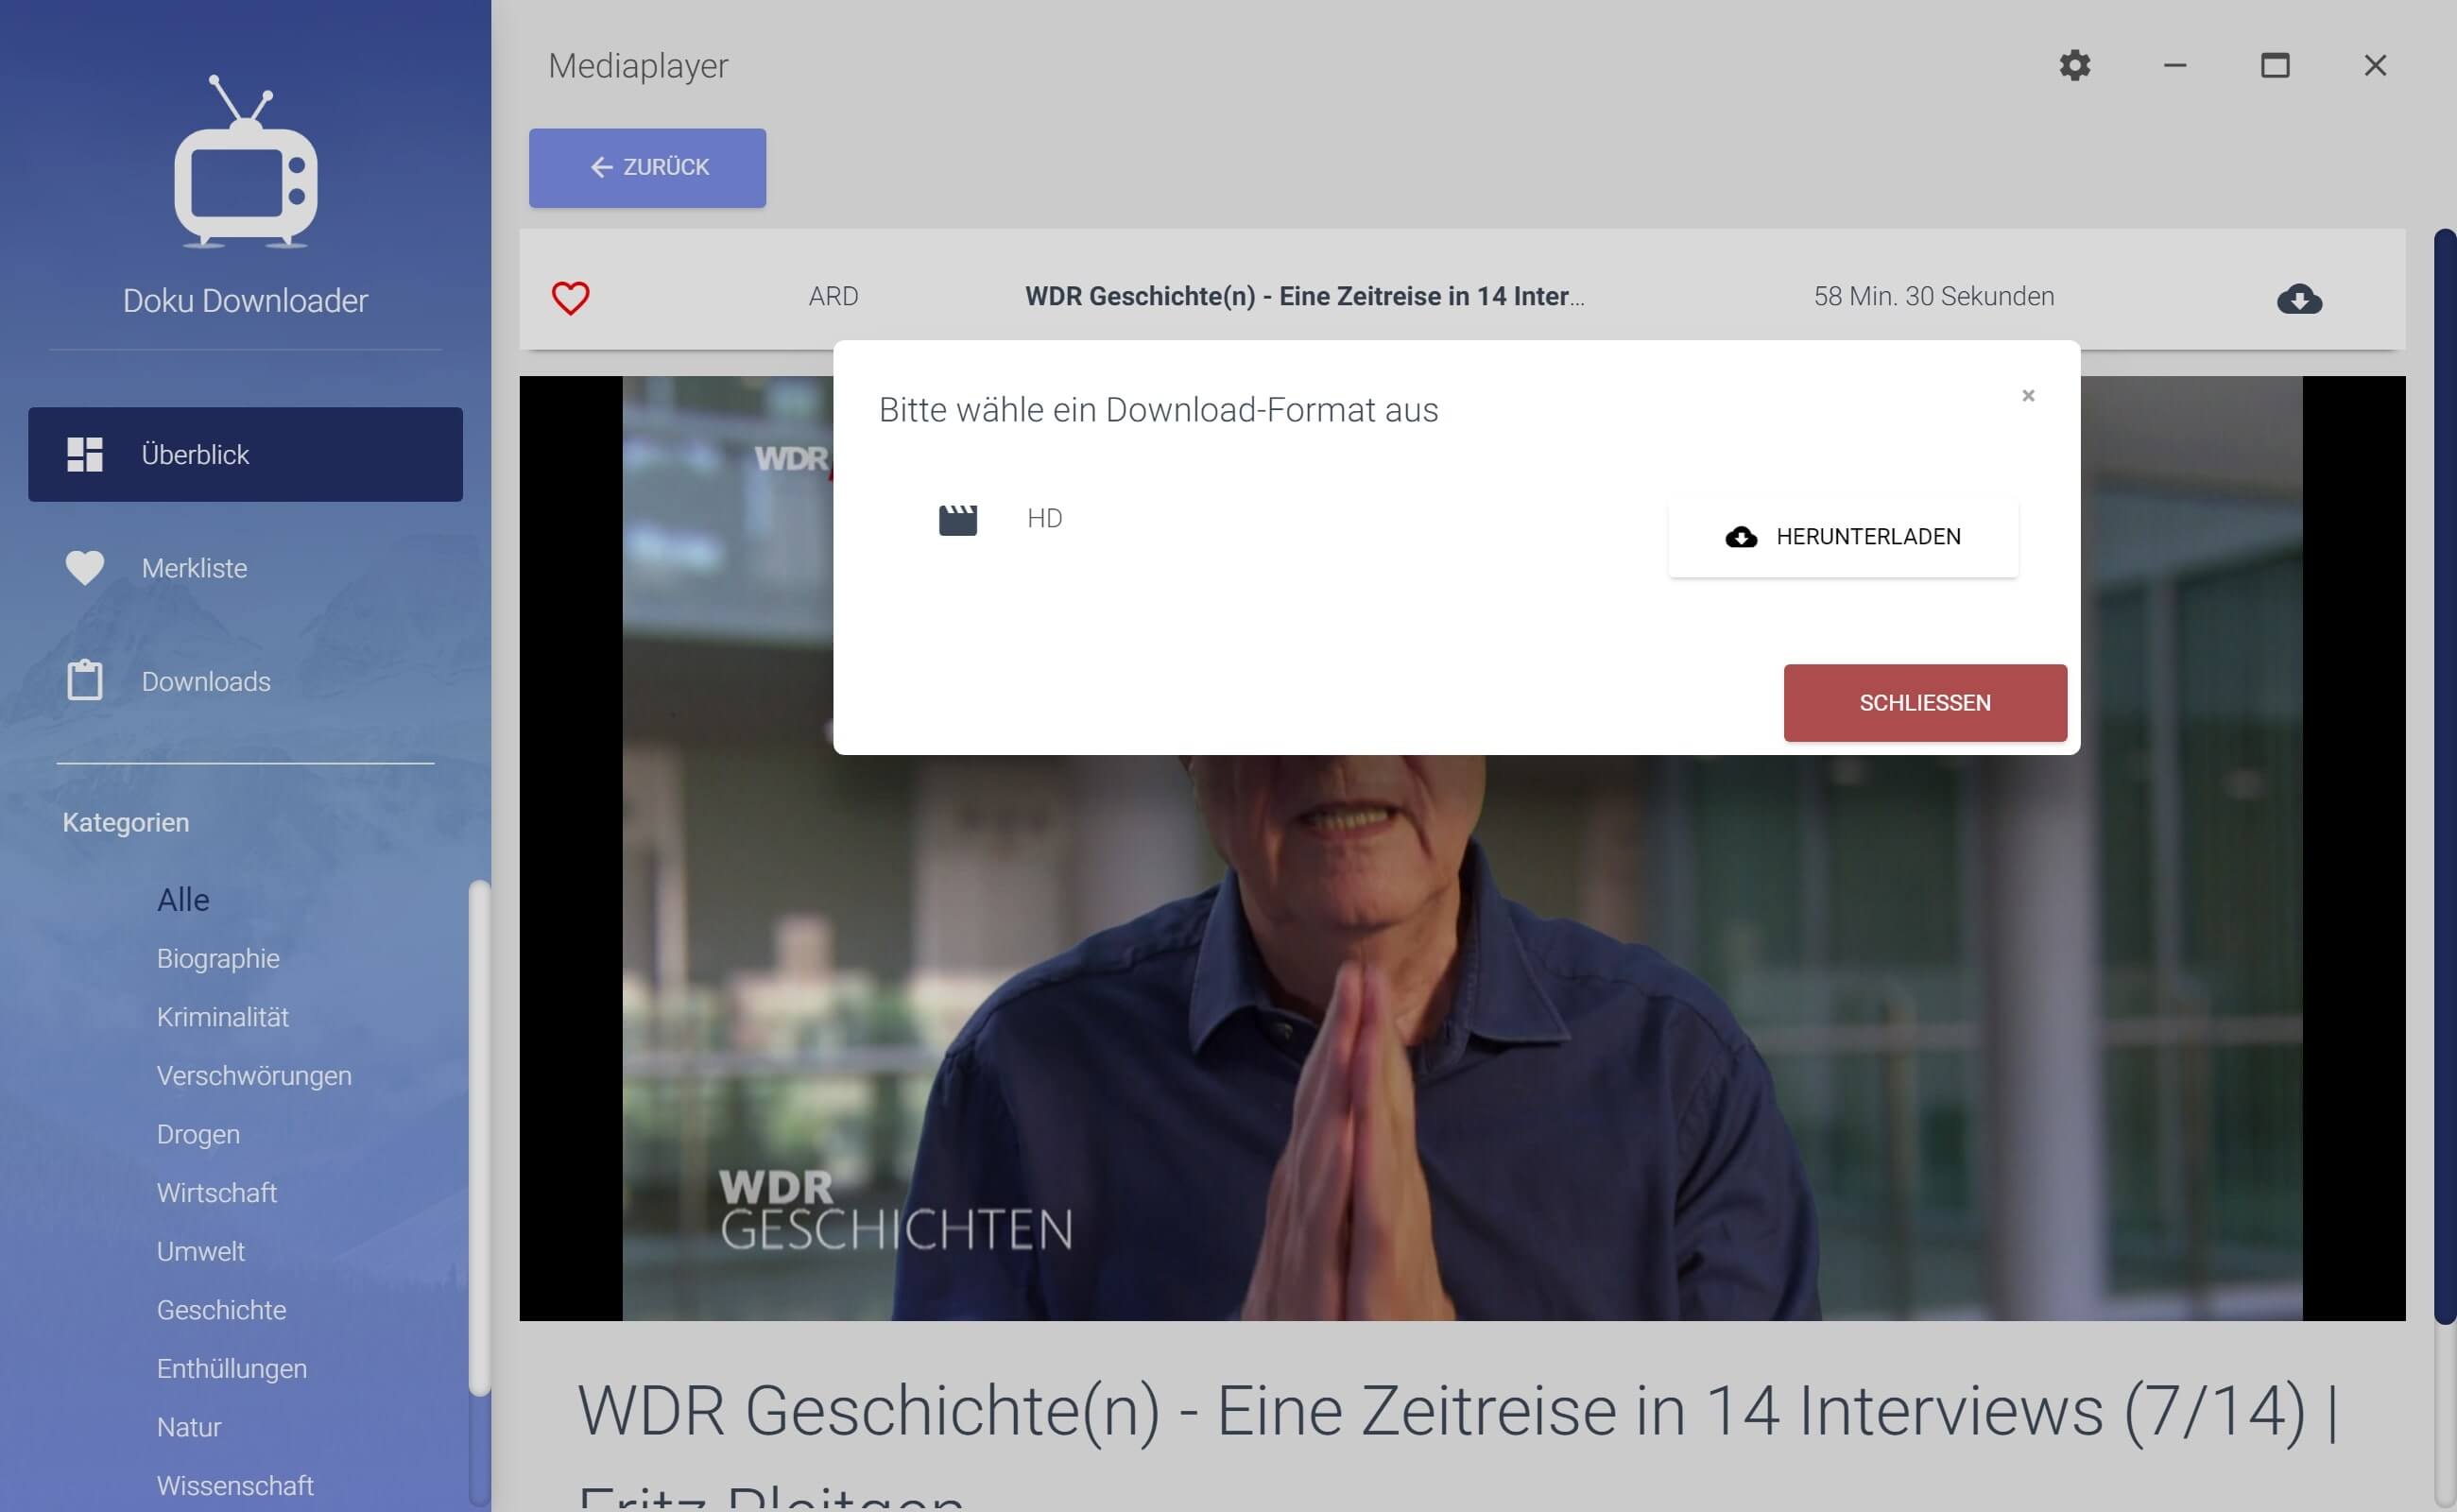 WDR Dokumentation aus Mediathek herunterladen - Downloadformat